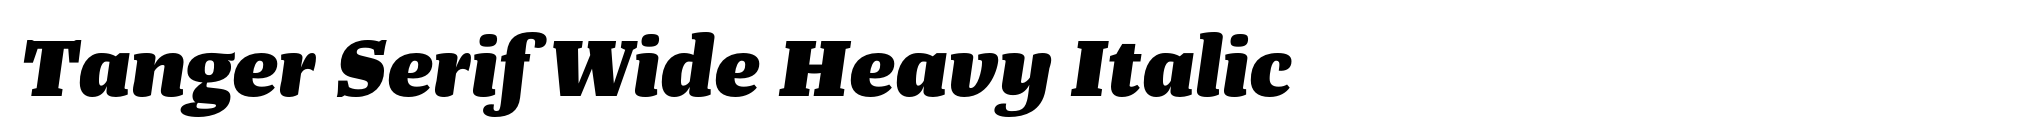 Tanger Serif Wide Heavy Italic image